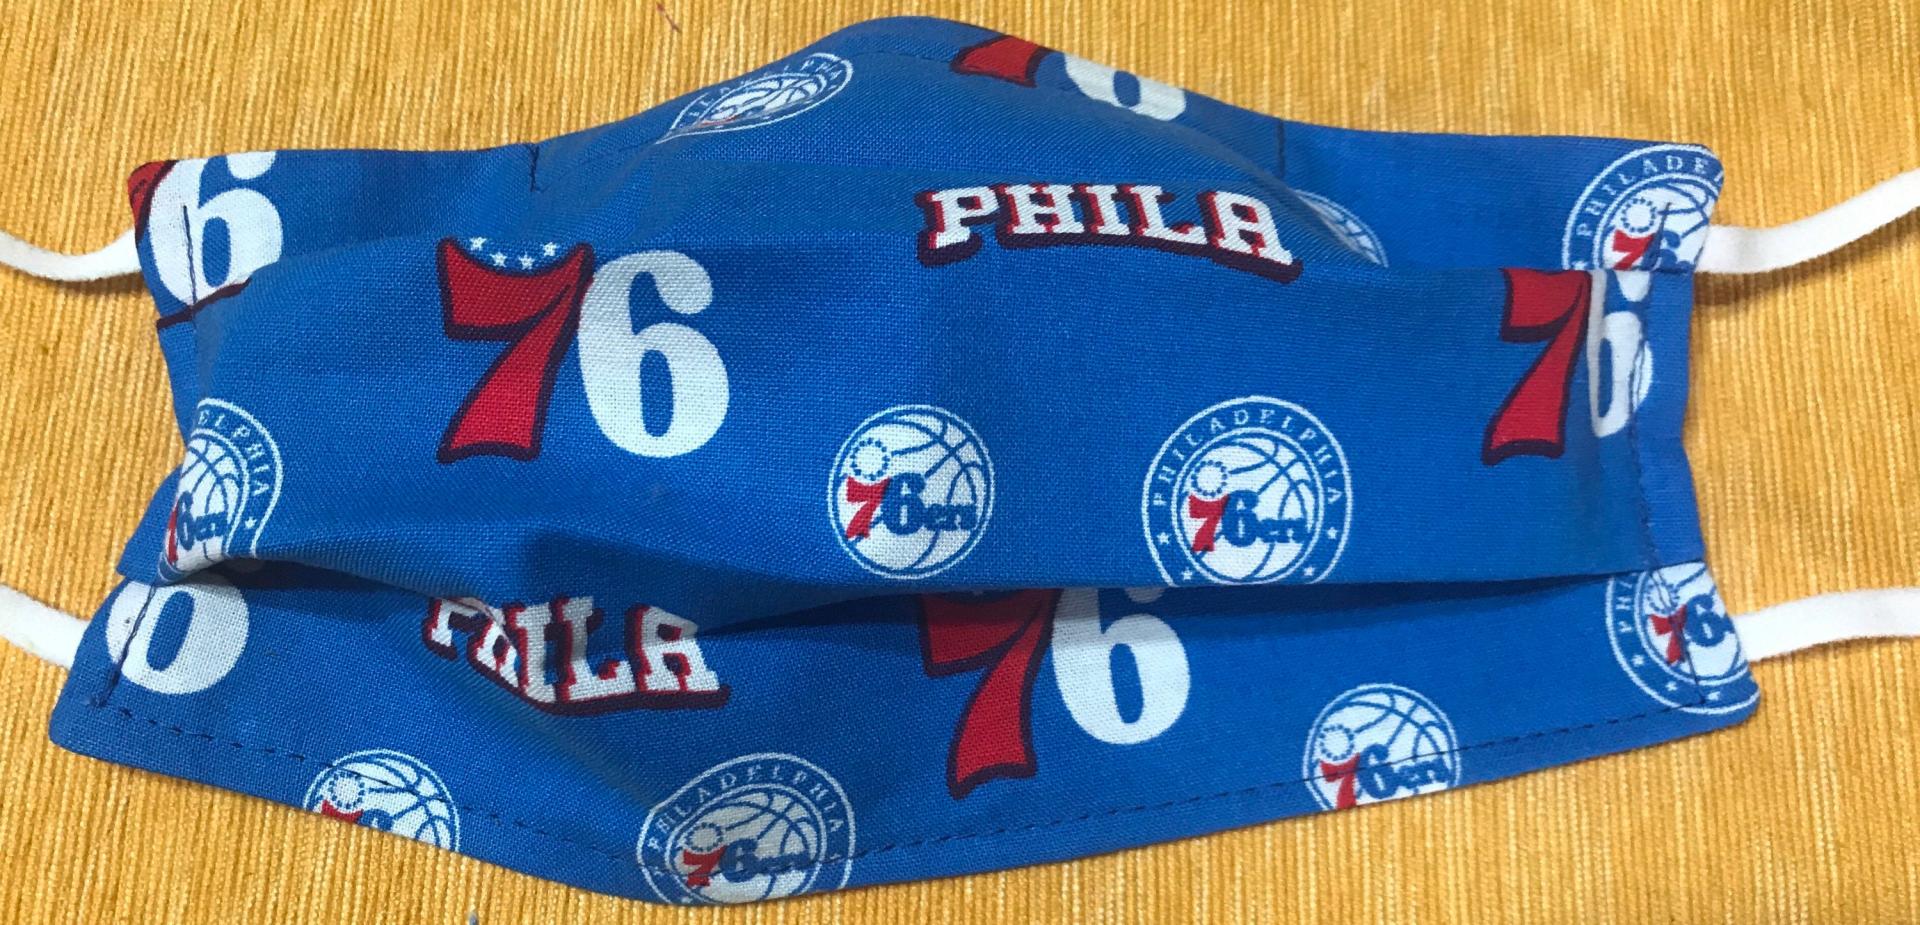 Philadelphia 76ers & Phillies Reversible Face Mask